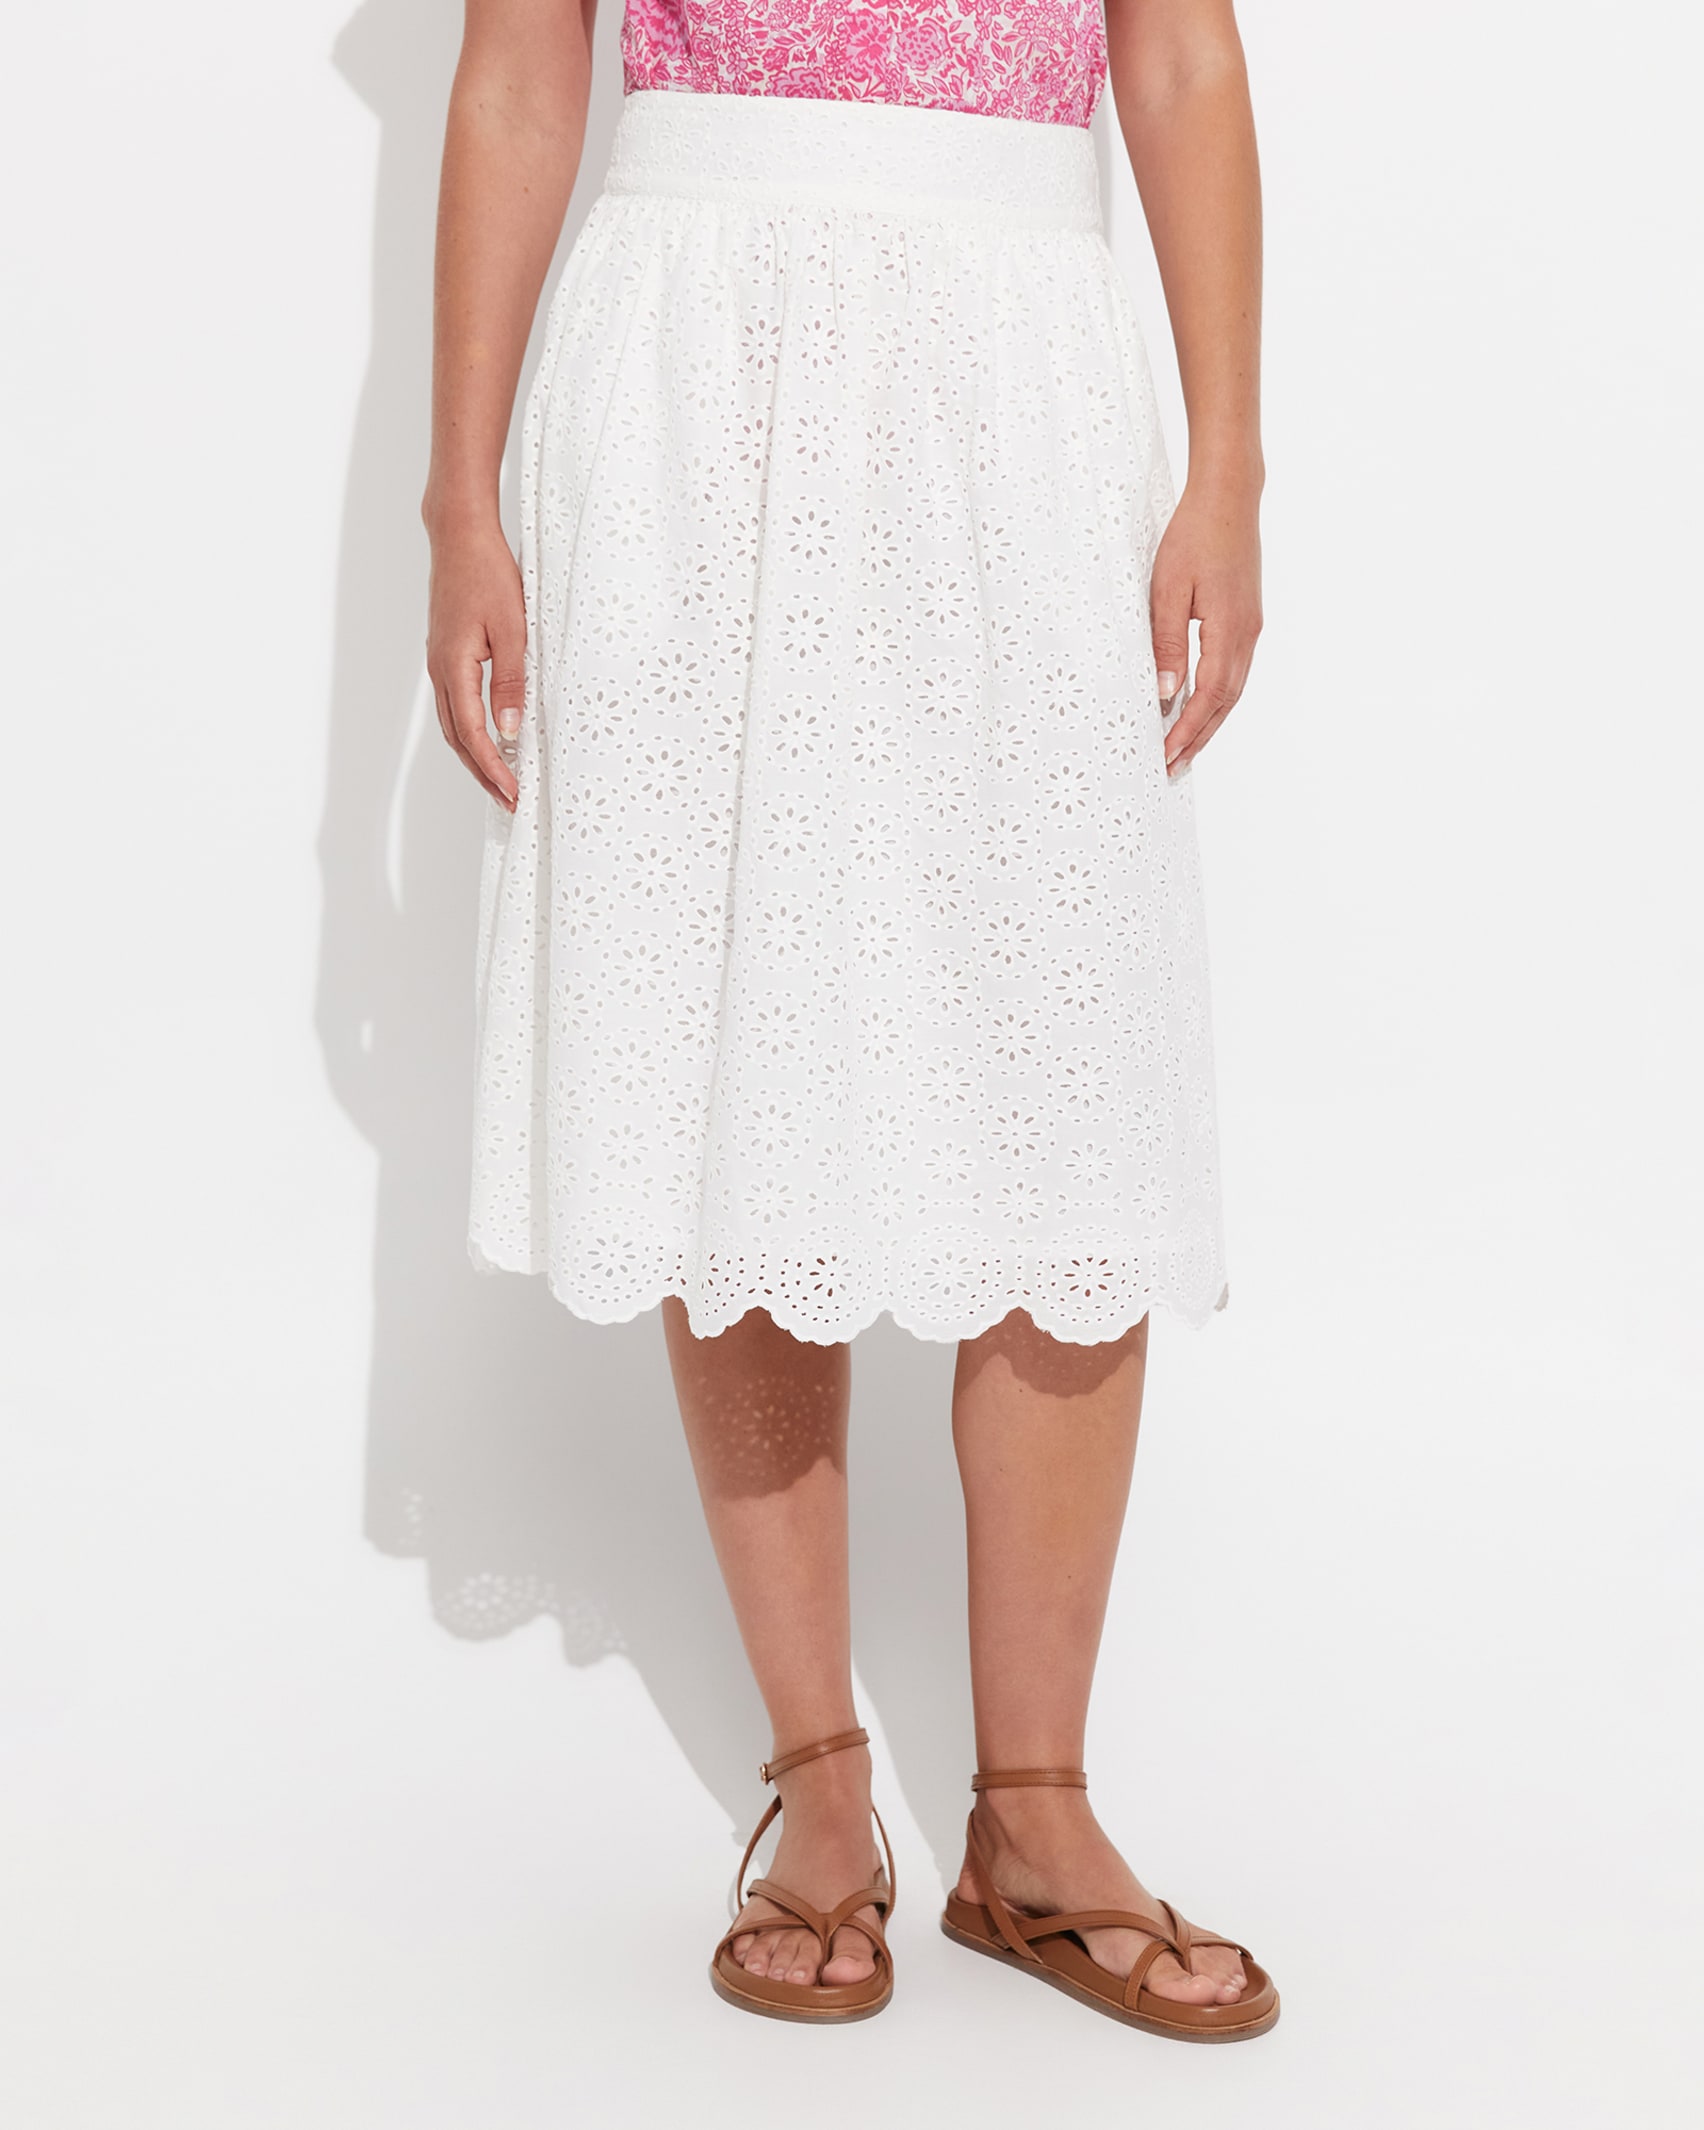 Sorrento Embroidered Skirt in WHITE